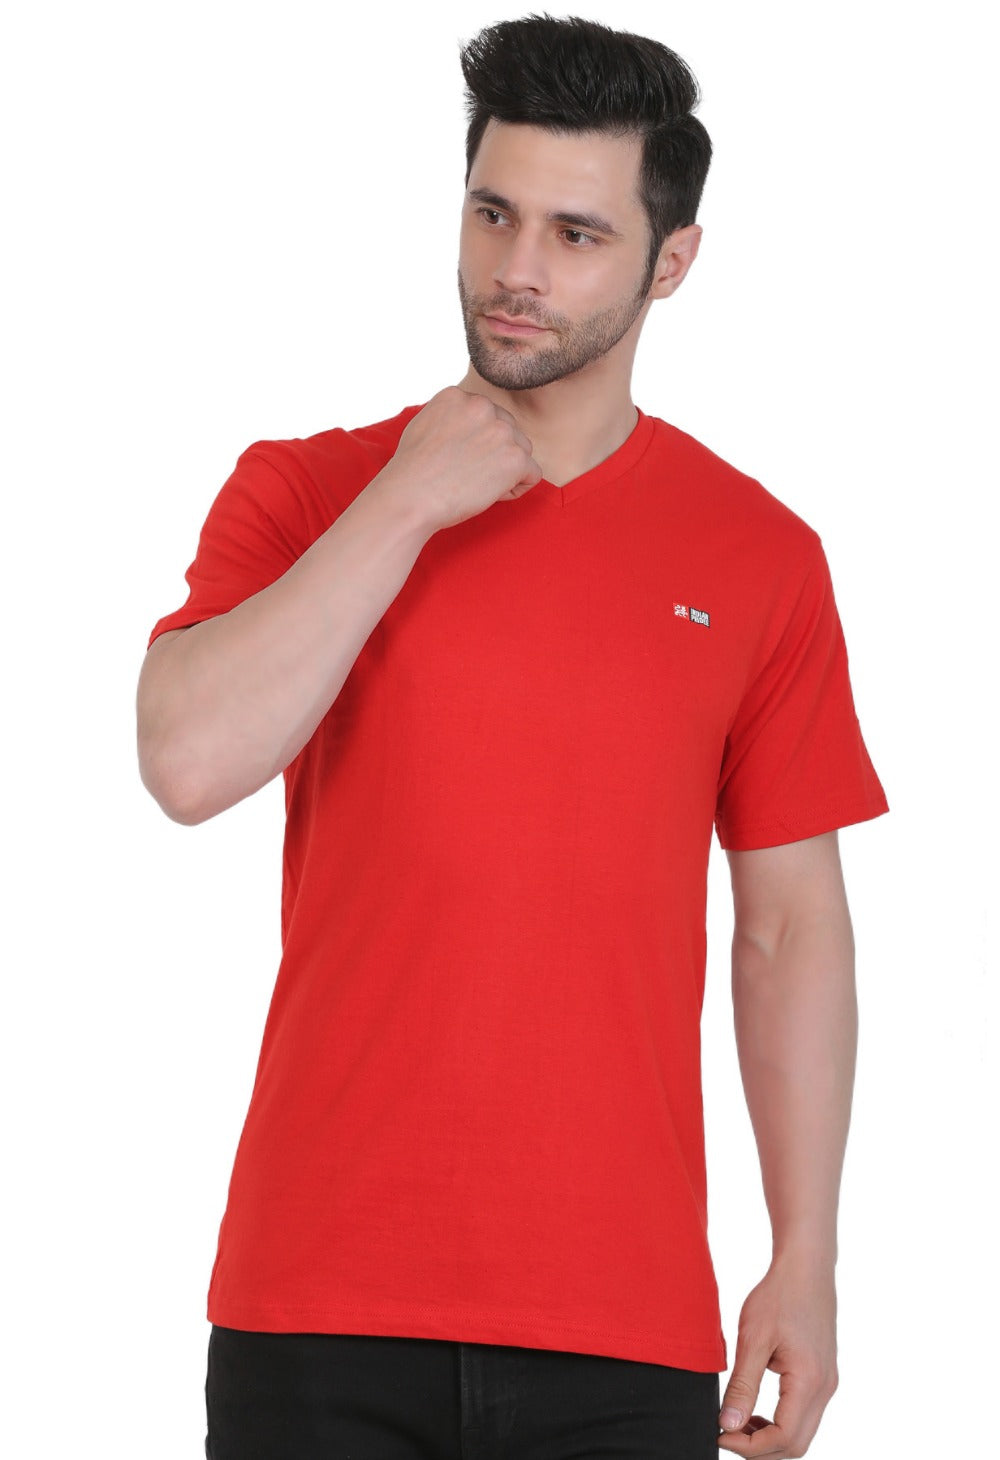 Men's Cotton Jersey V Neck Plain Tshirt (Red) - GillKart